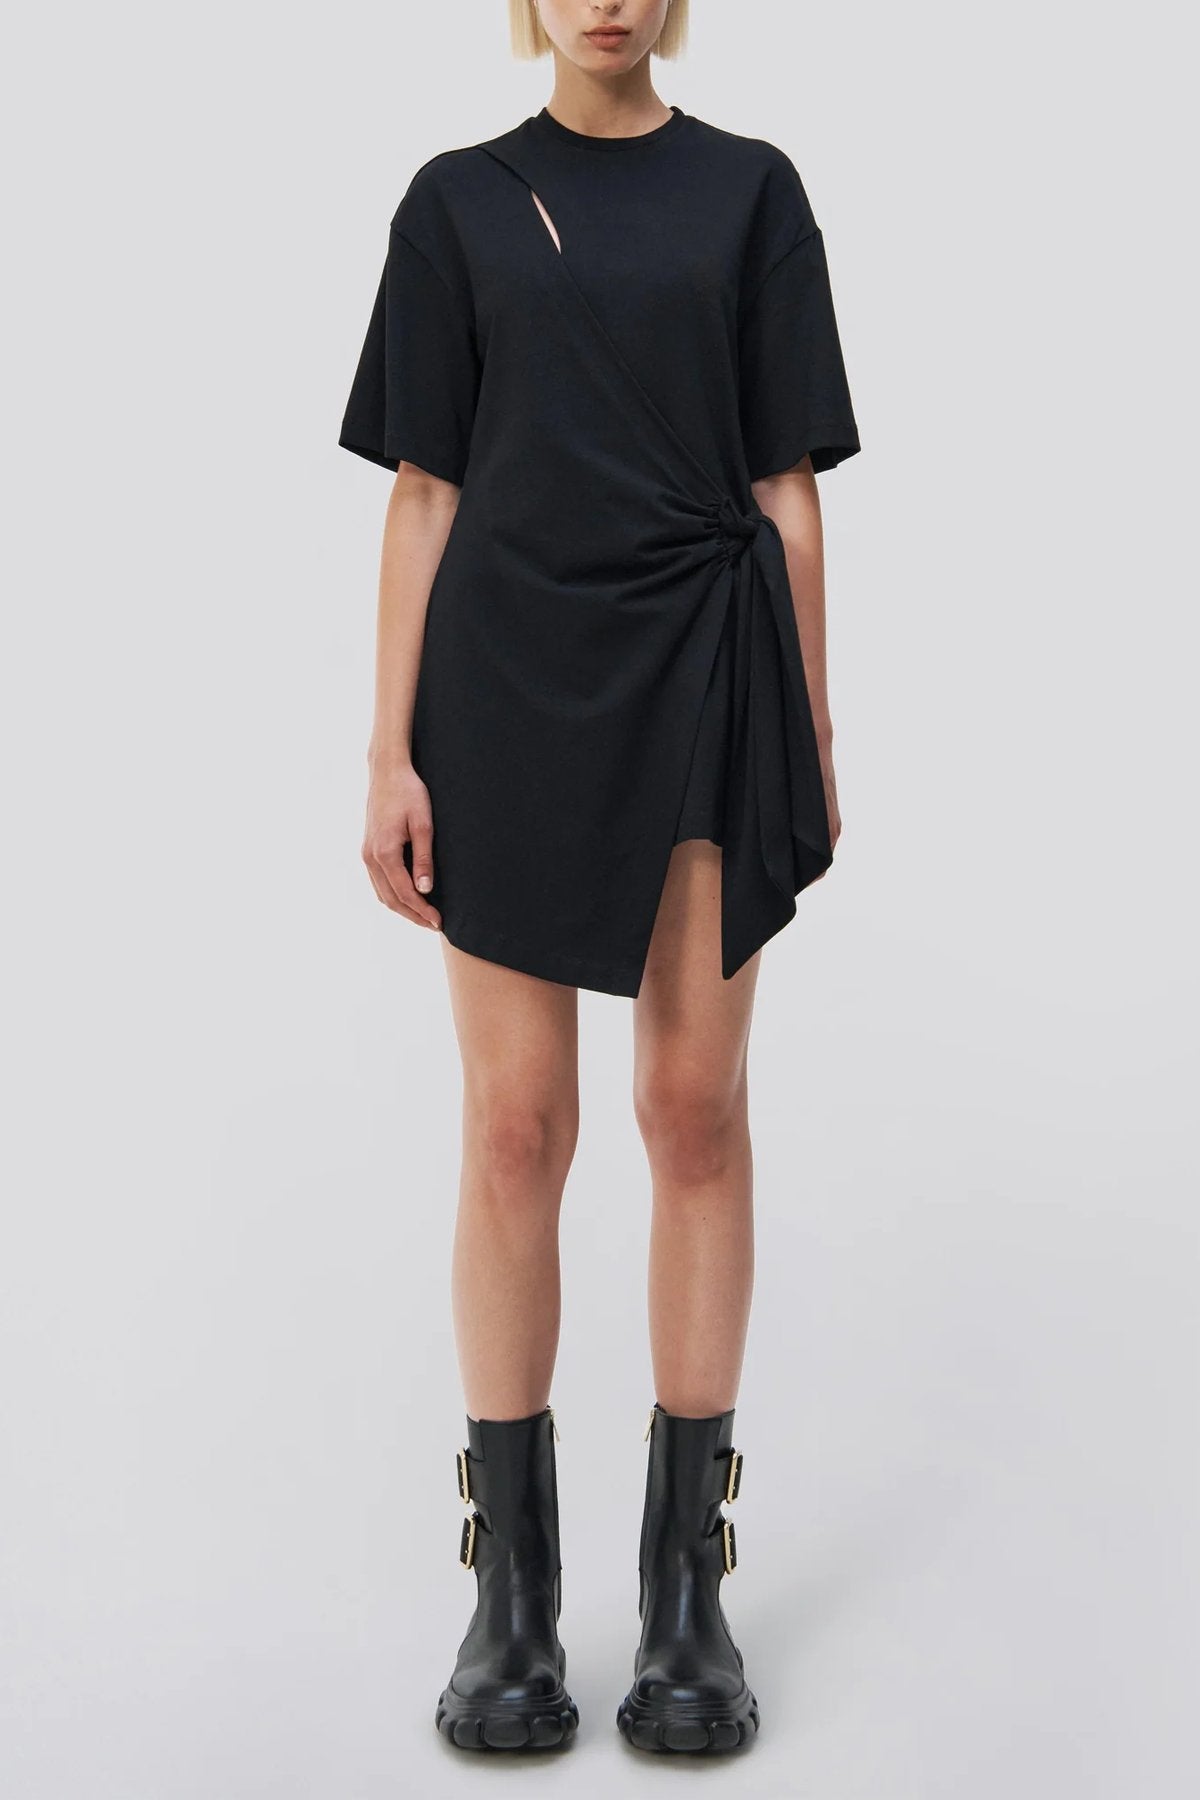 Livia Mini Dress in Black - shop-olivia.com